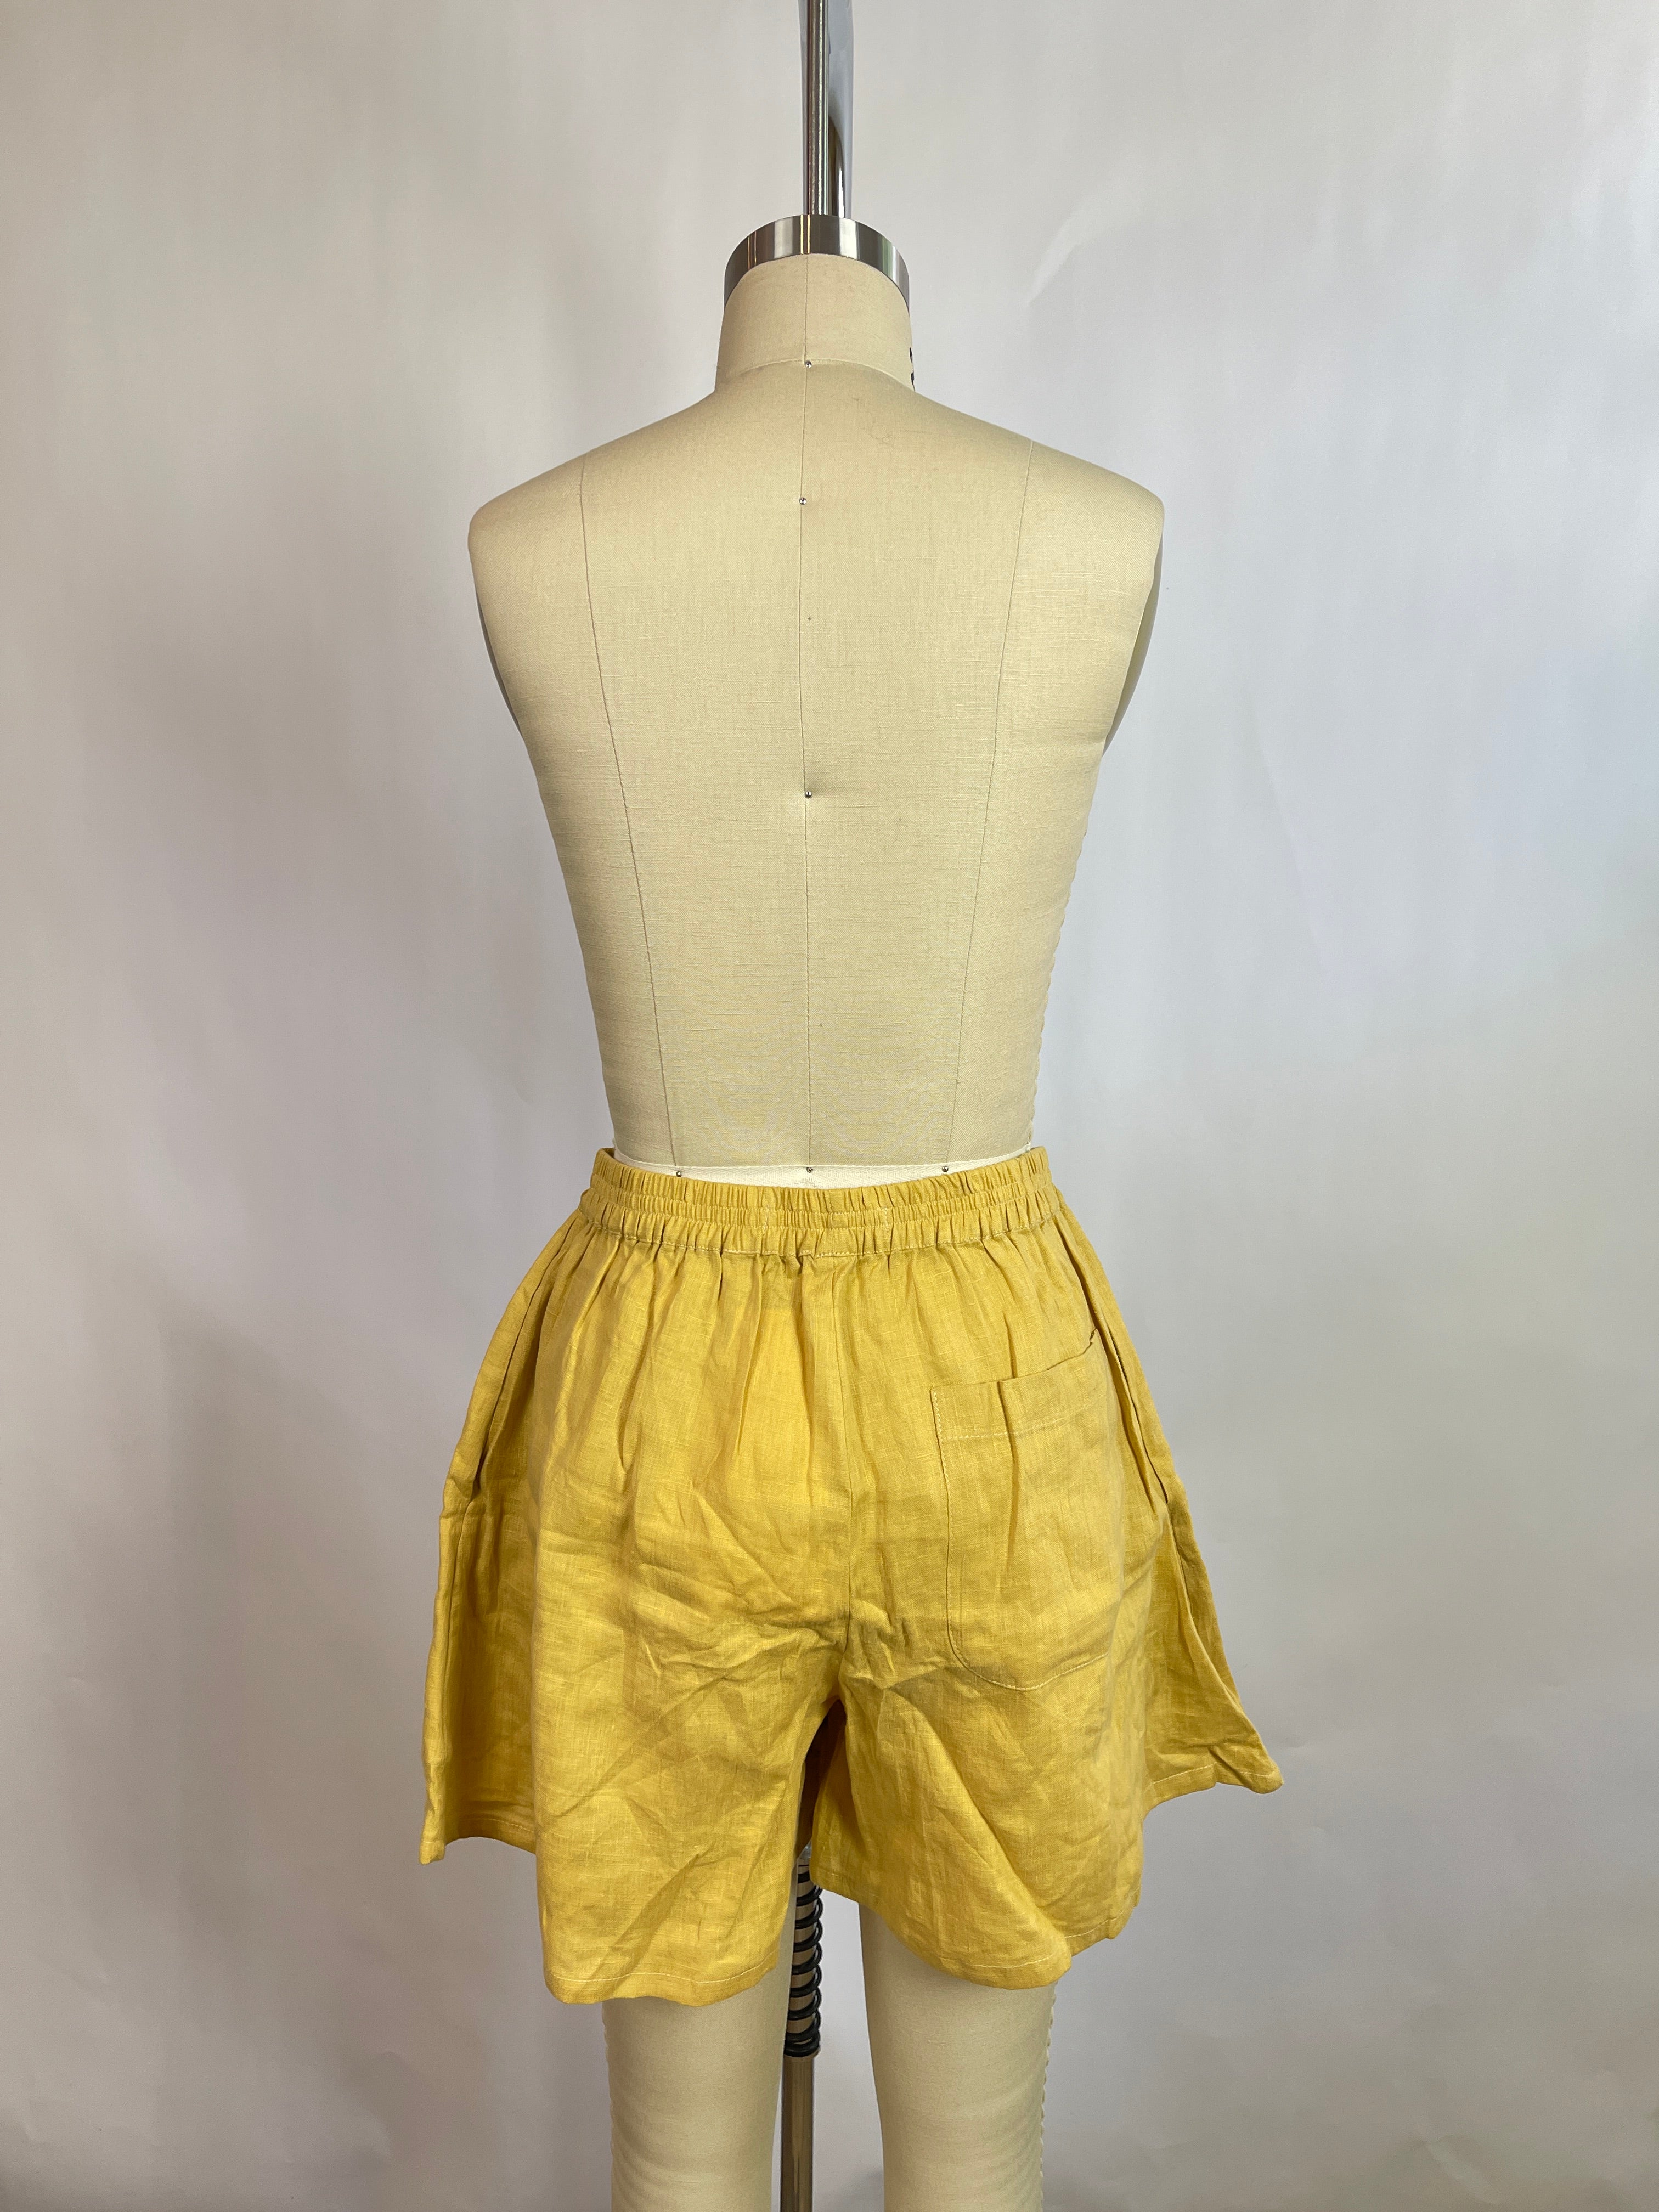 Zii Ropa Yellow Shorts (M)